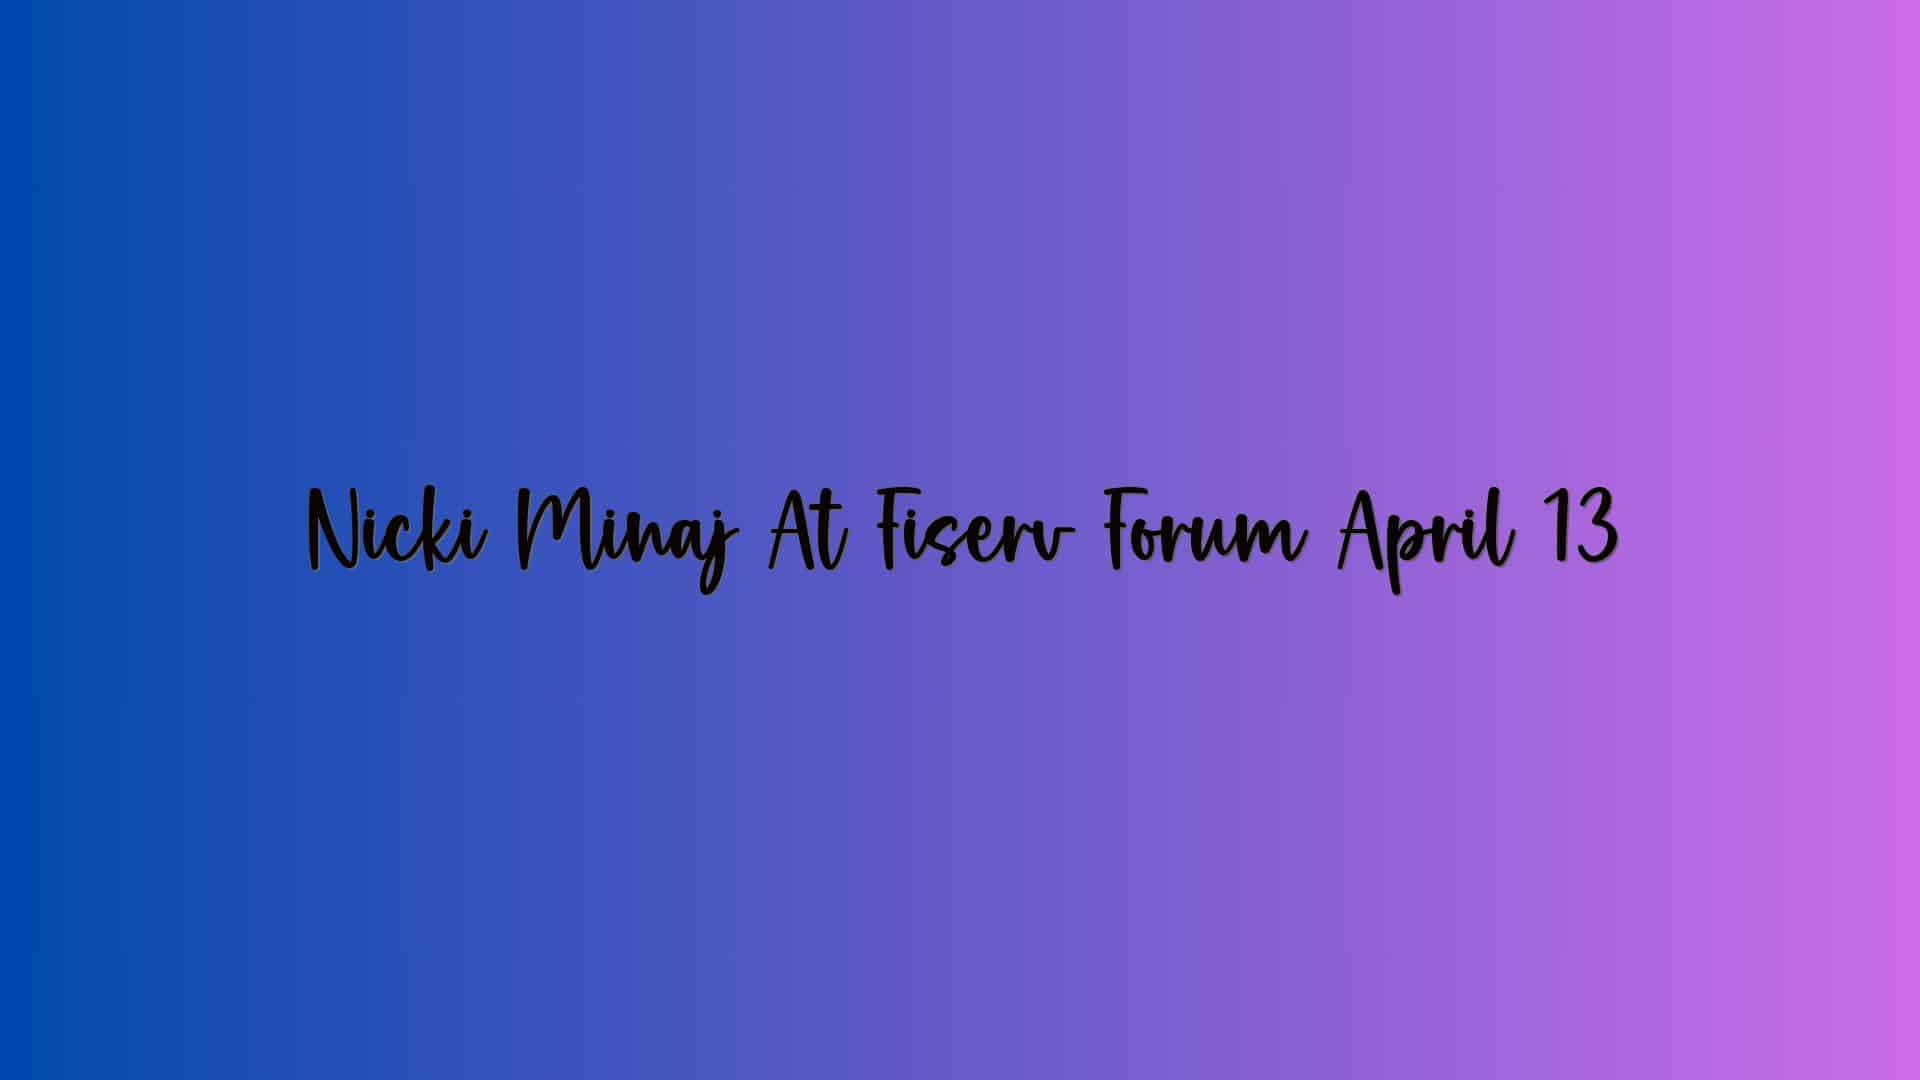 Nicki Minaj At Fiserv Forum April 13